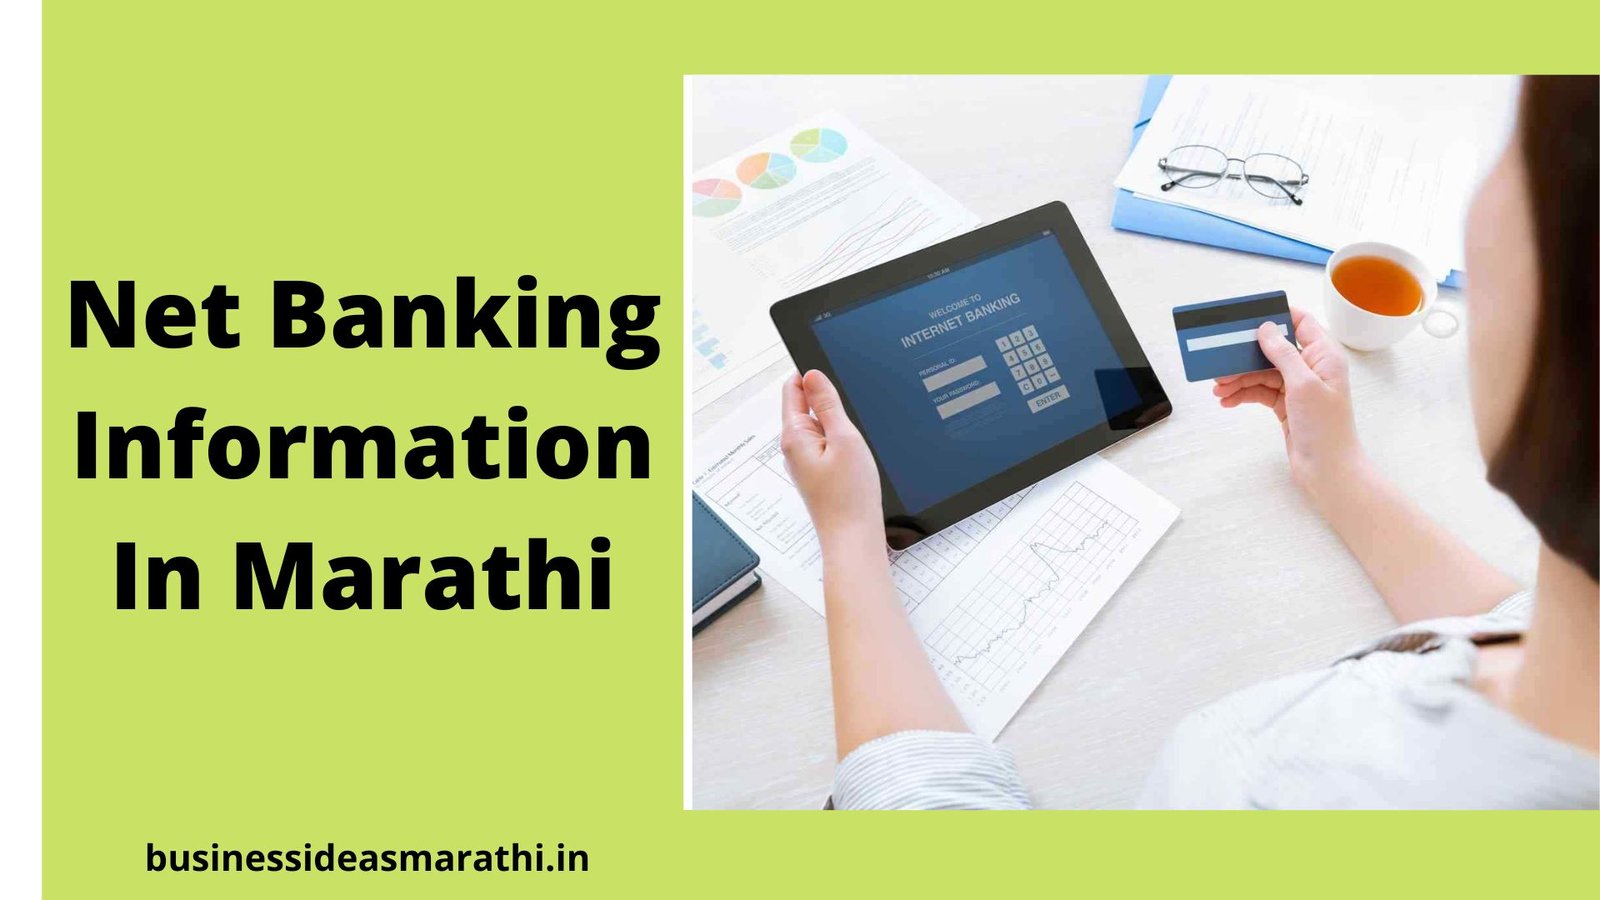 Net Banking Information In Marathi